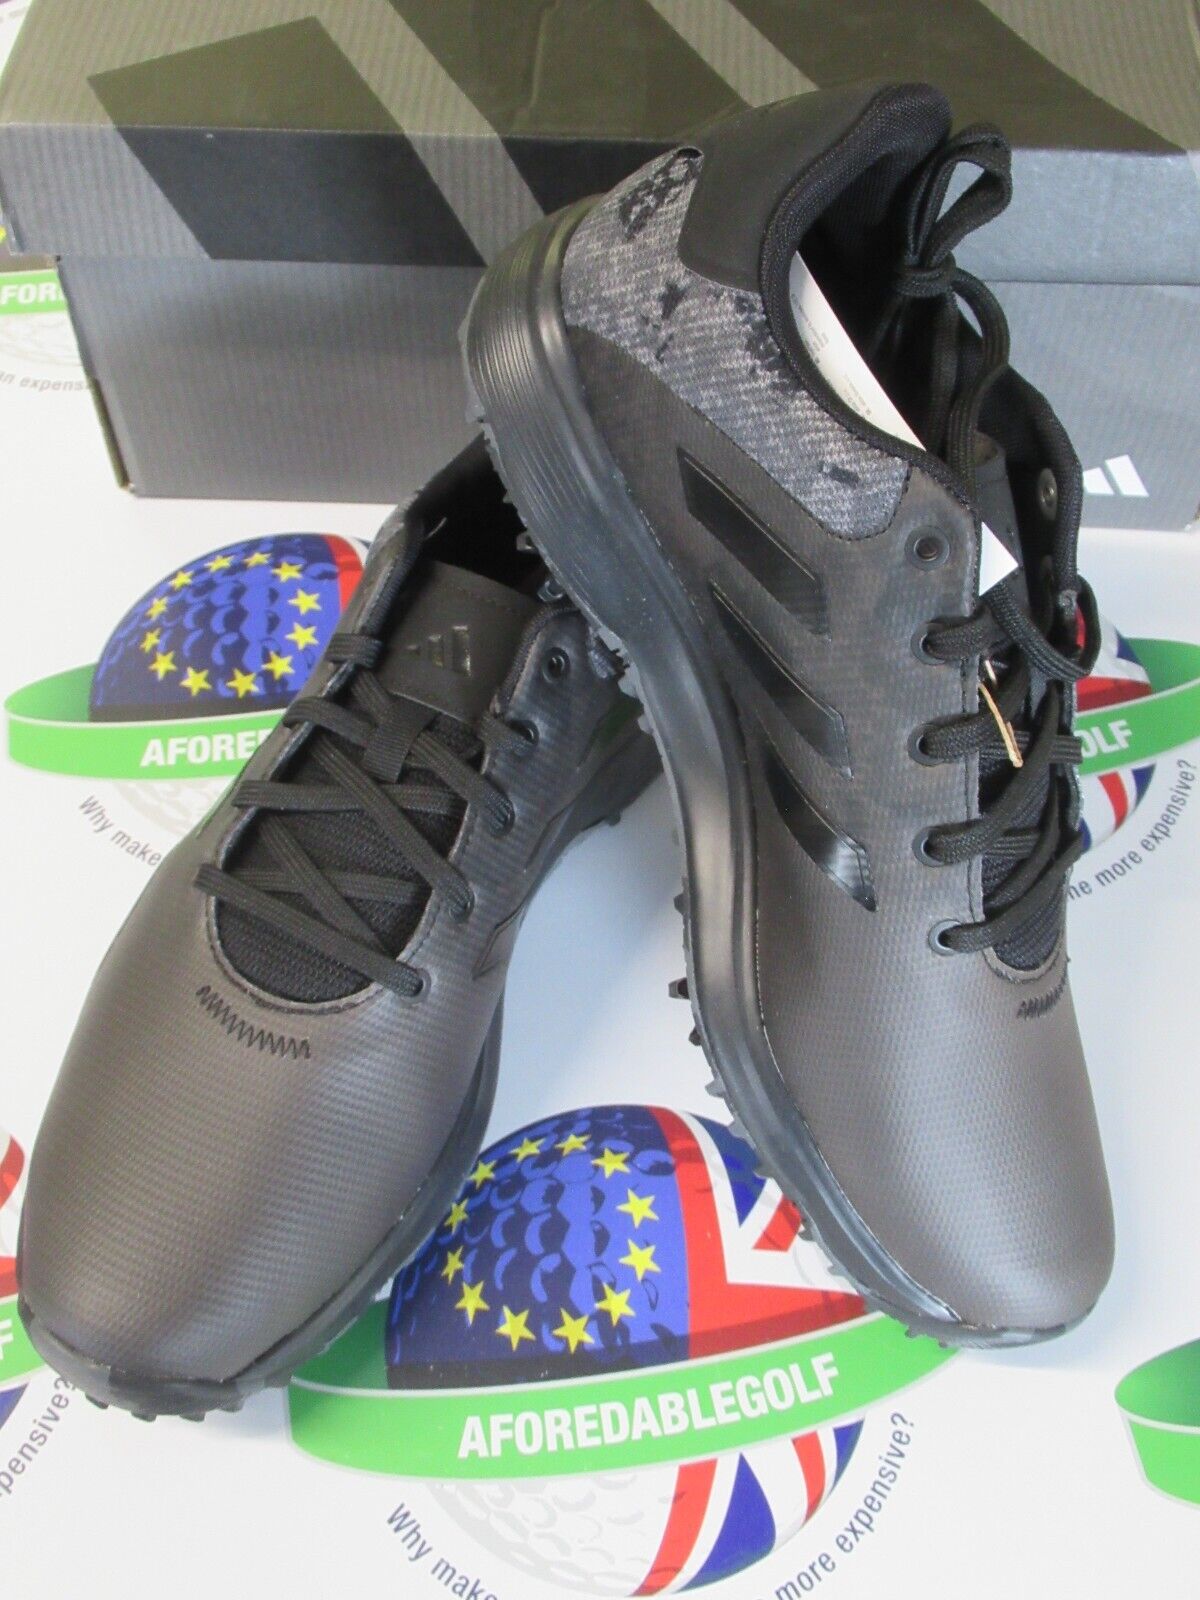 adidas s2g 23 black/grey camo spiked golf shoes uk size 8 medium